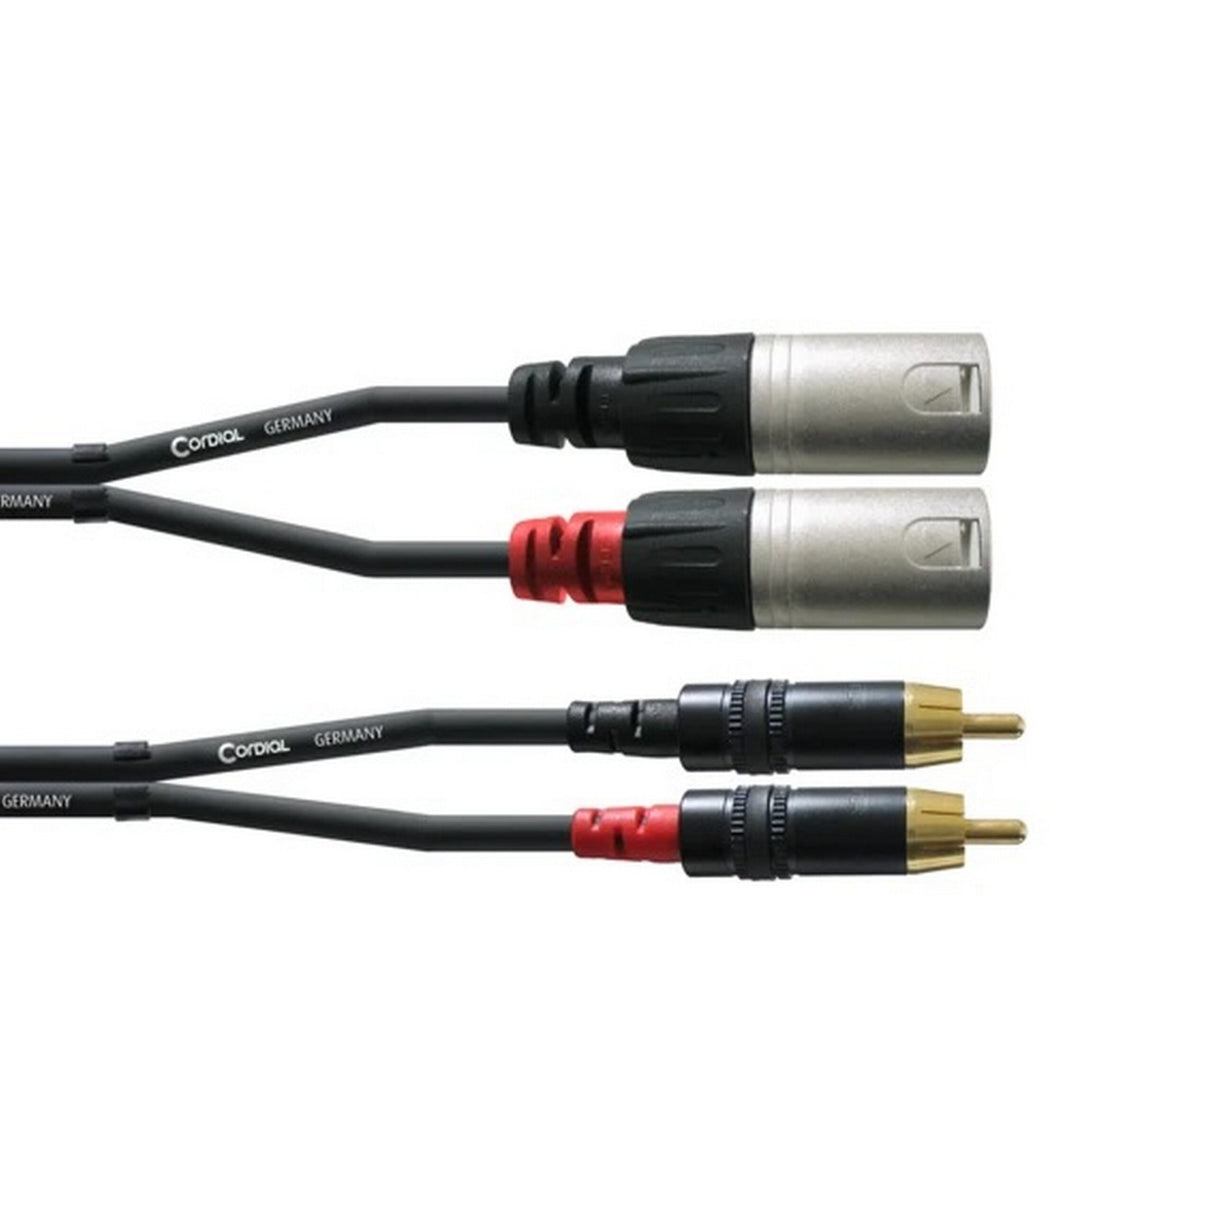 Cordial CFU 3 MC 2 x XLRM to 2 x RCA Twin Cable/Adapter, Black, 10-Feet